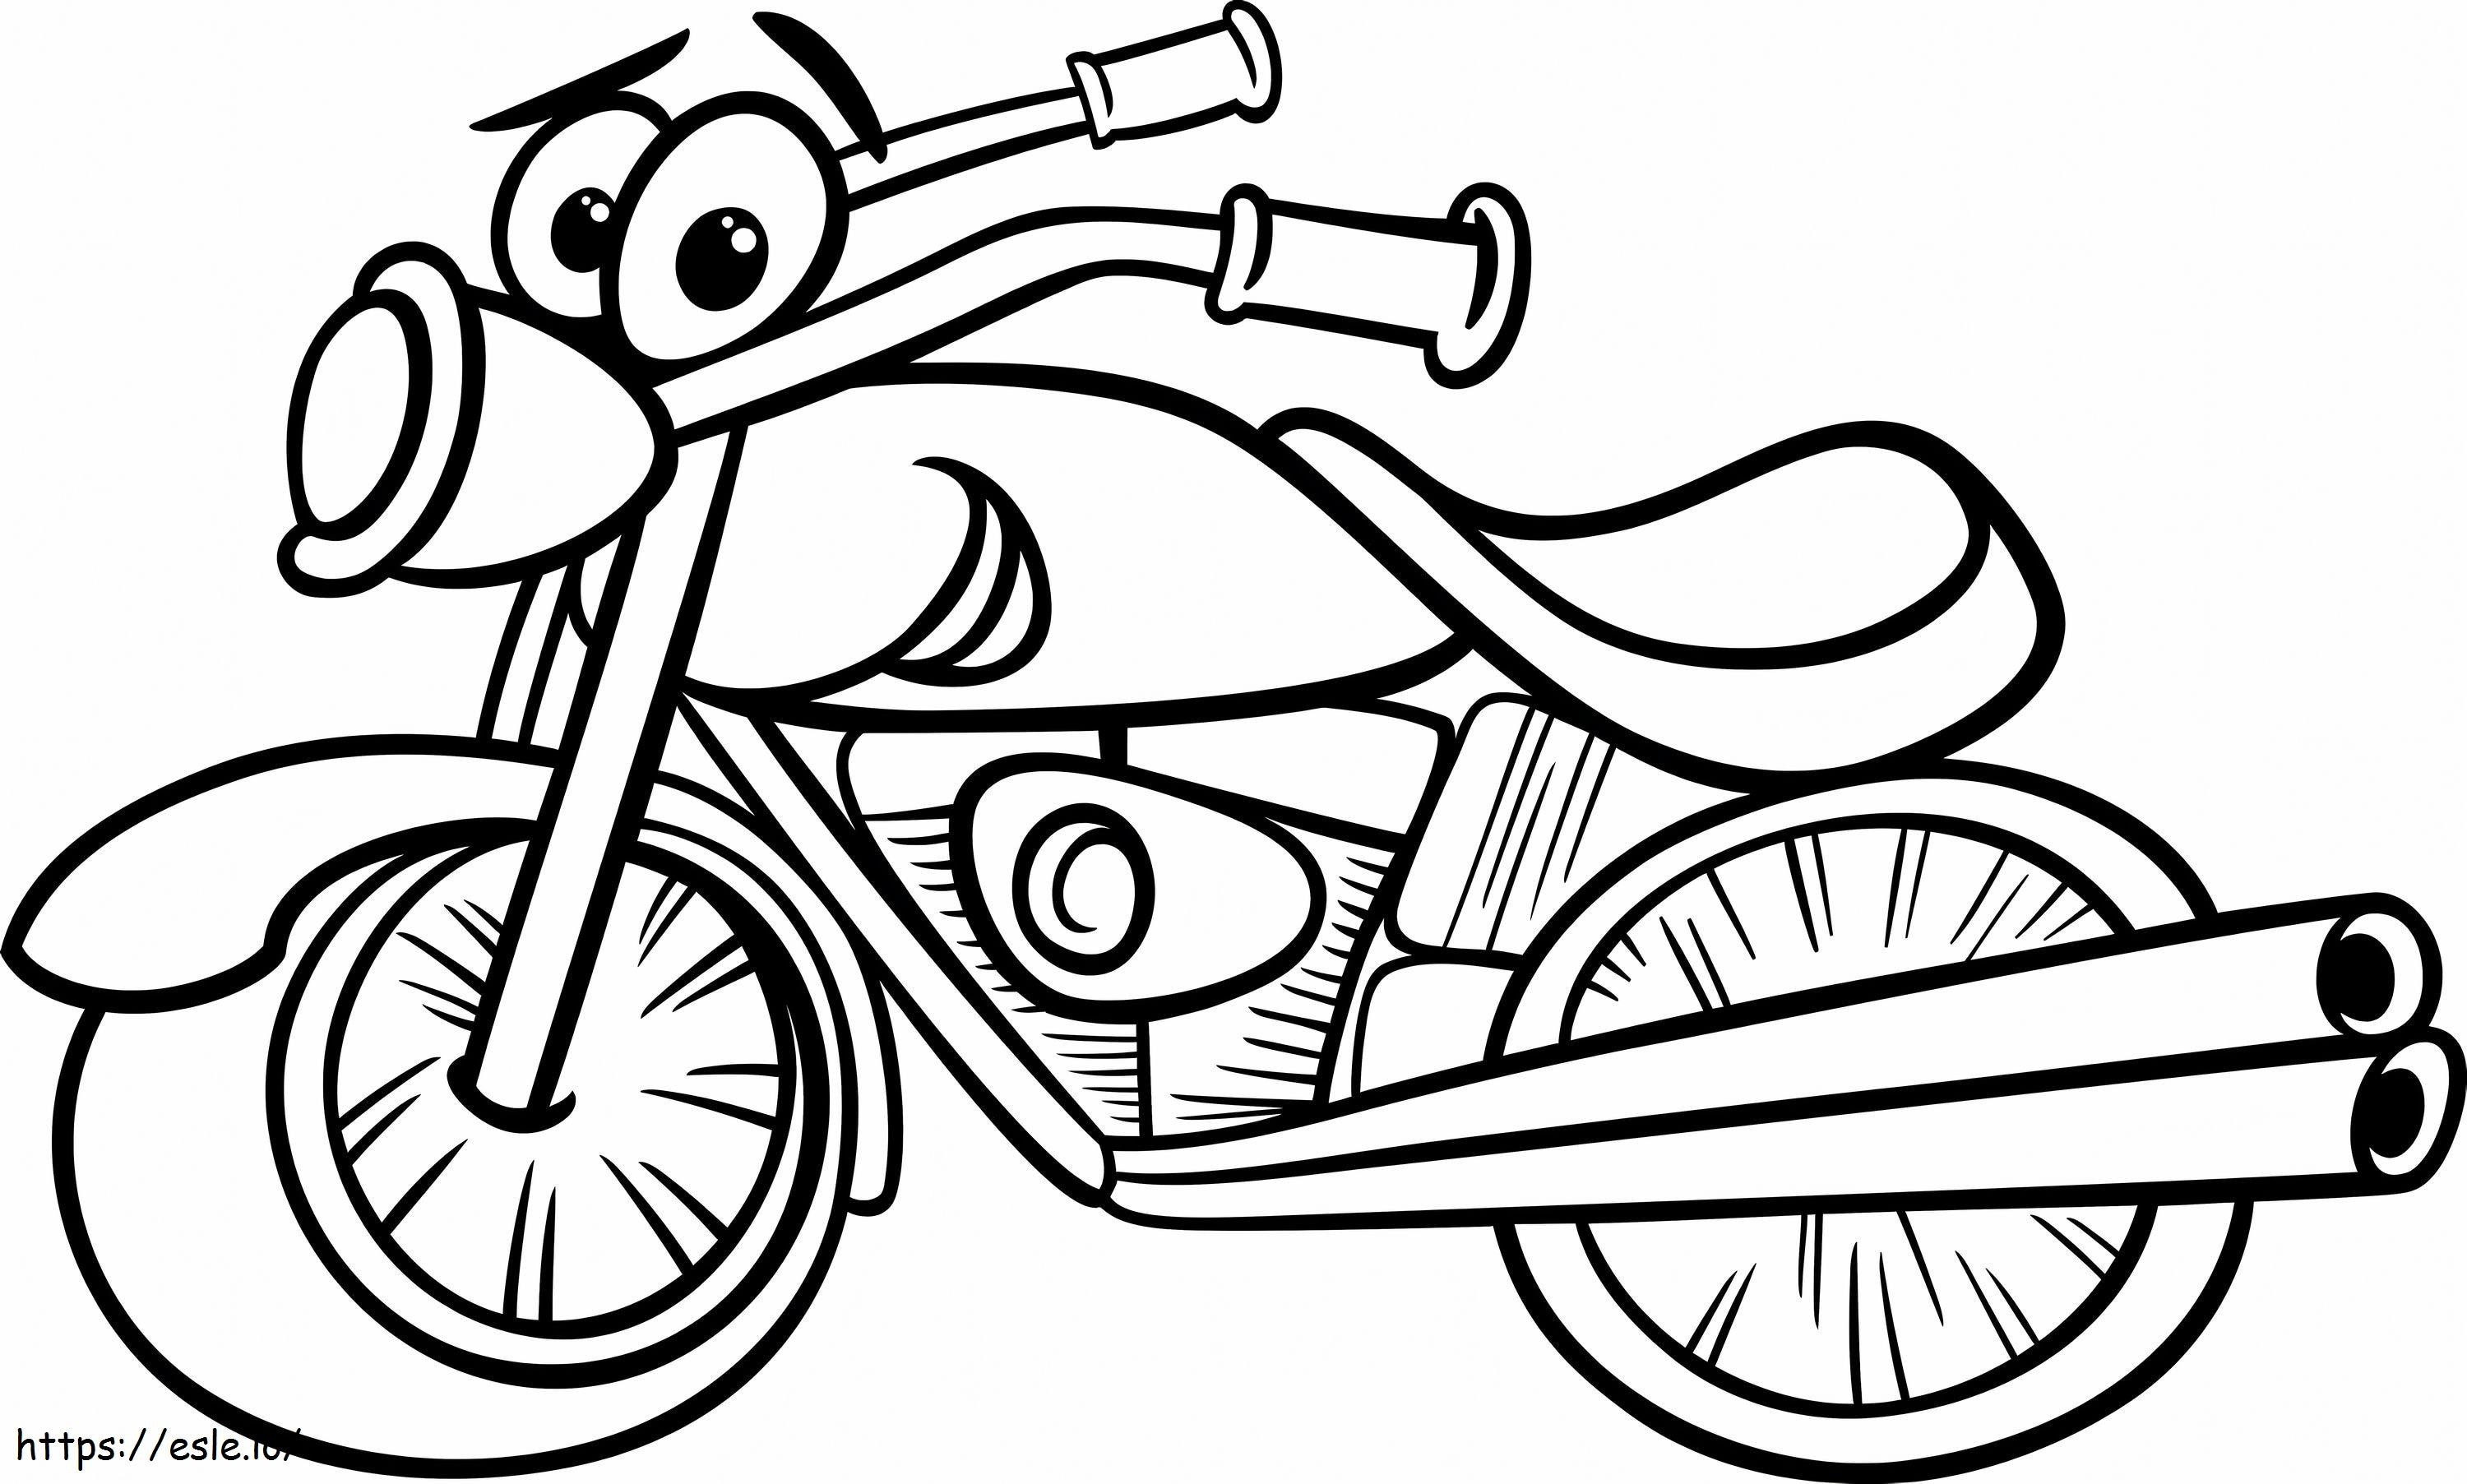 Motocicleta dos desenhos animados para colorir